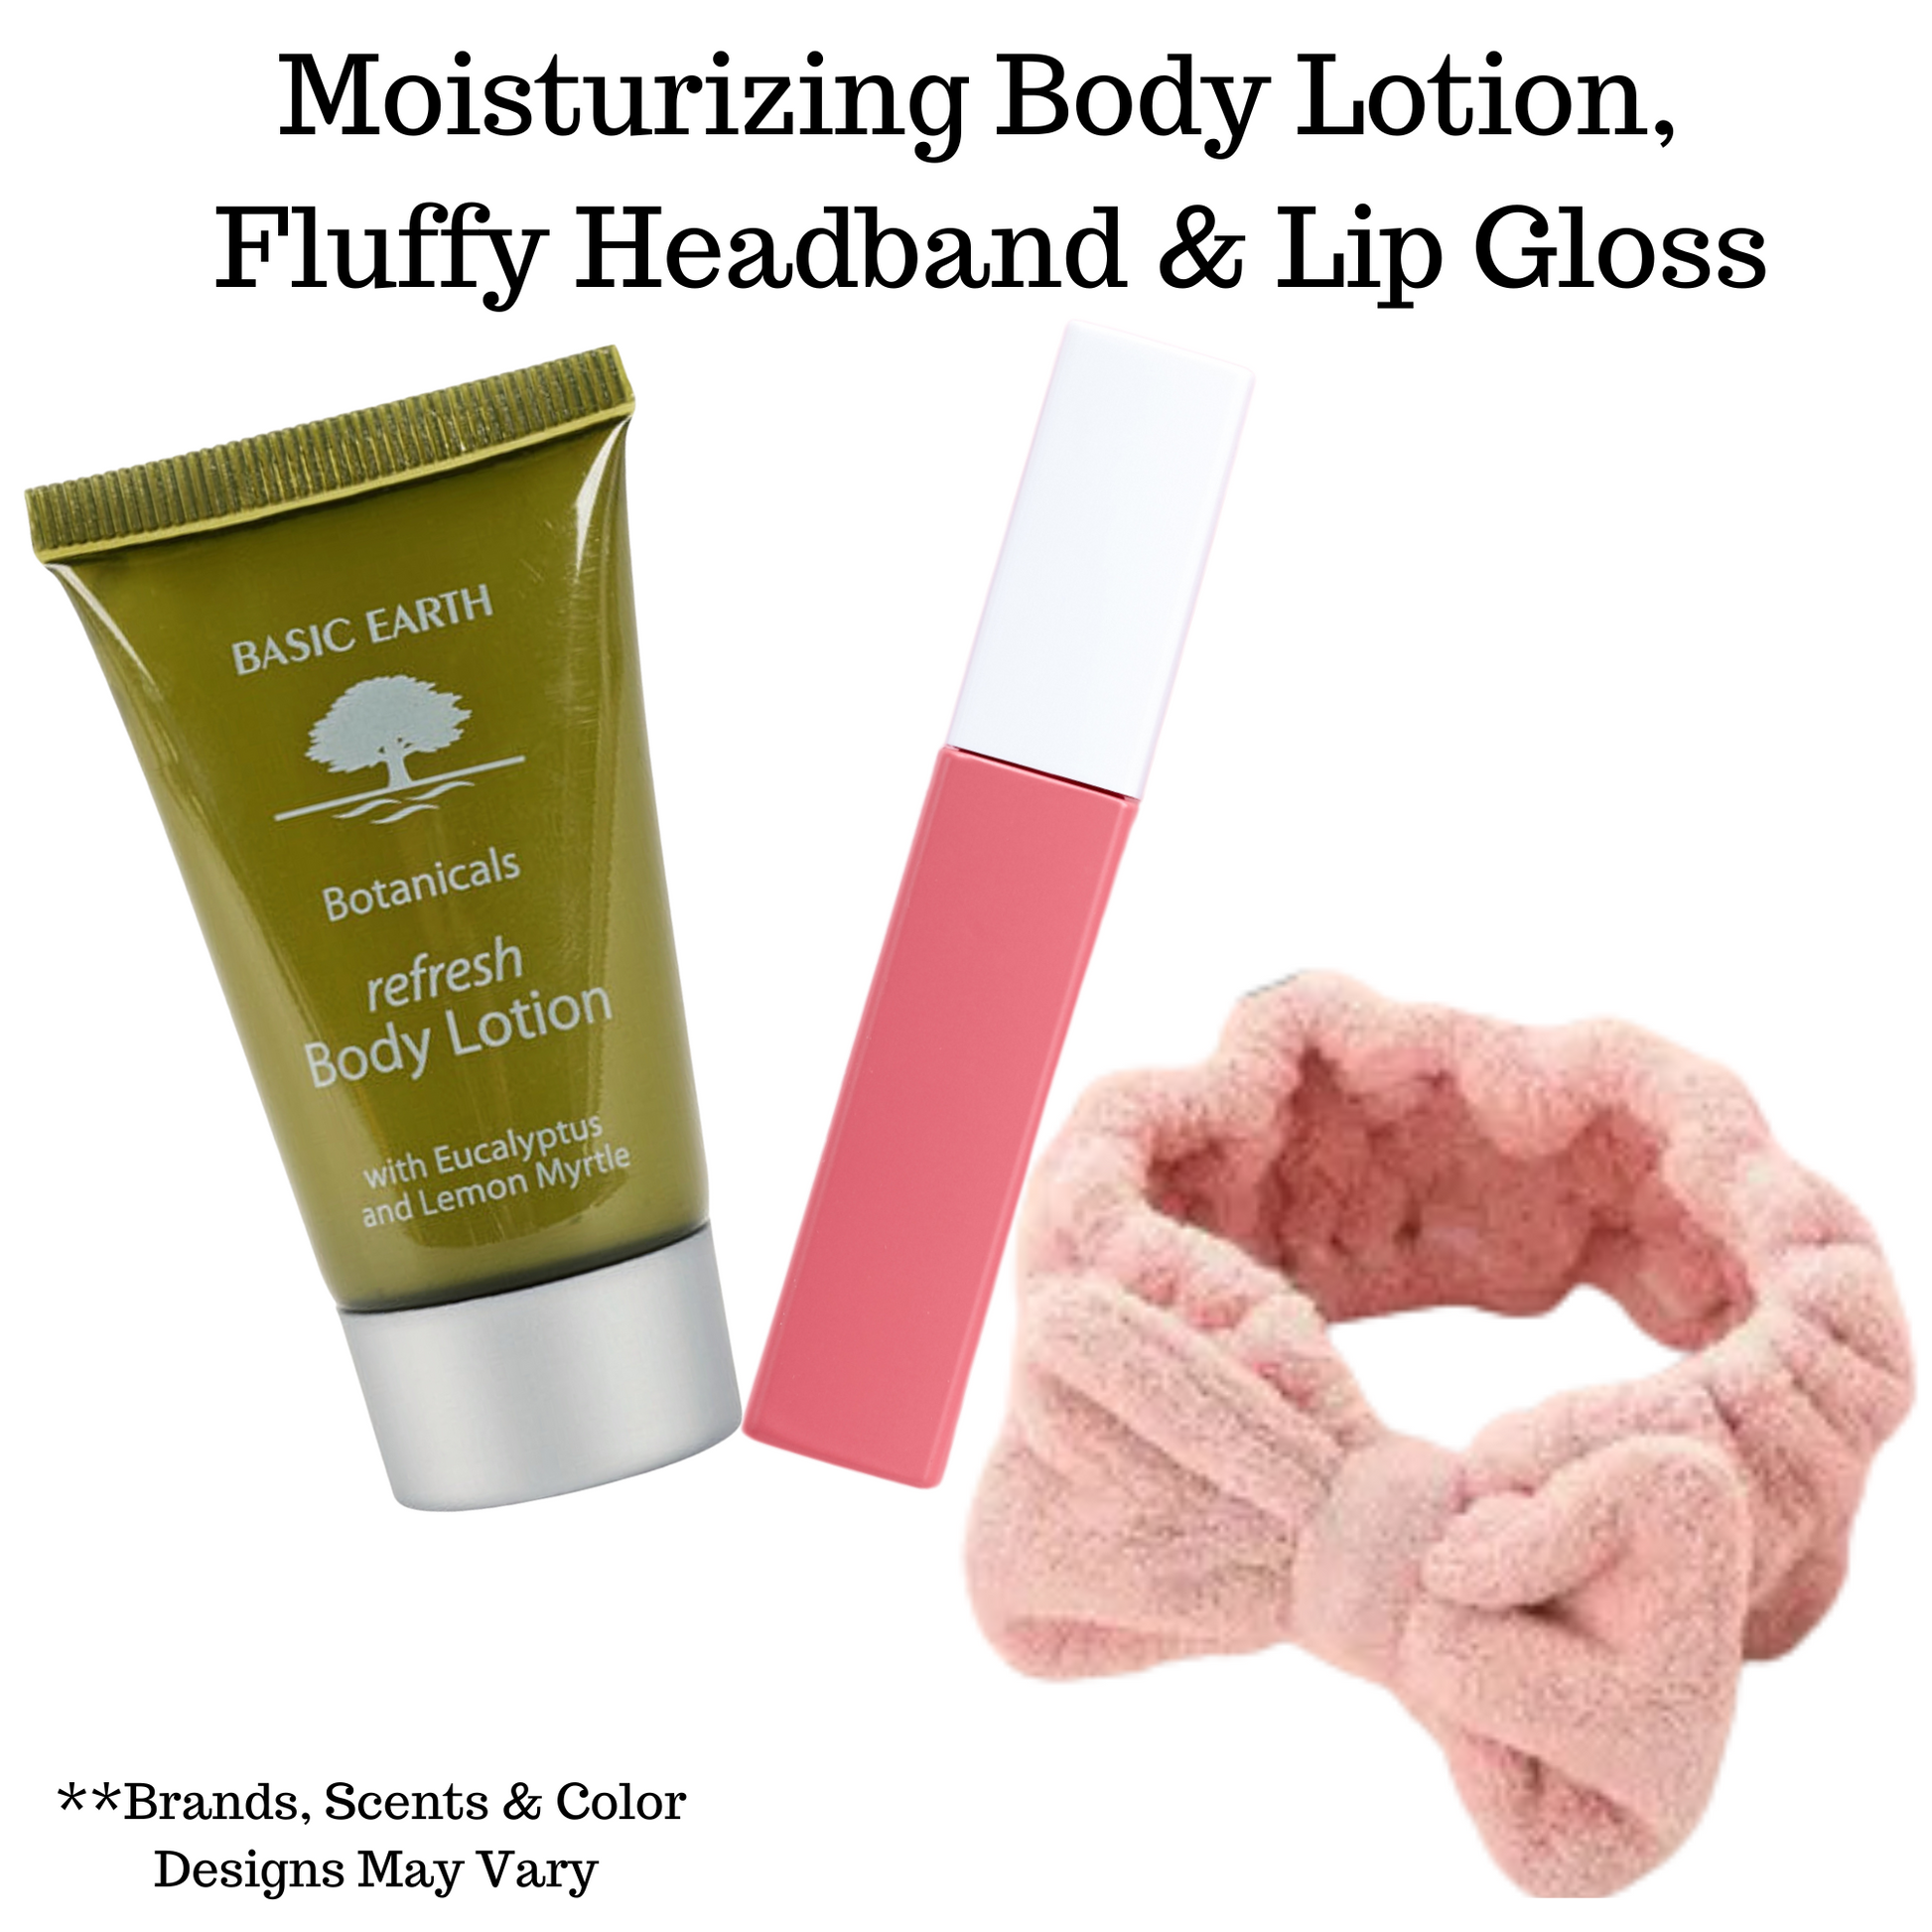 fluffy headband lotion lip gloss for teen tween girl present gift selfcare Hey You gift Box Houston Baytown Texas Gift Shop